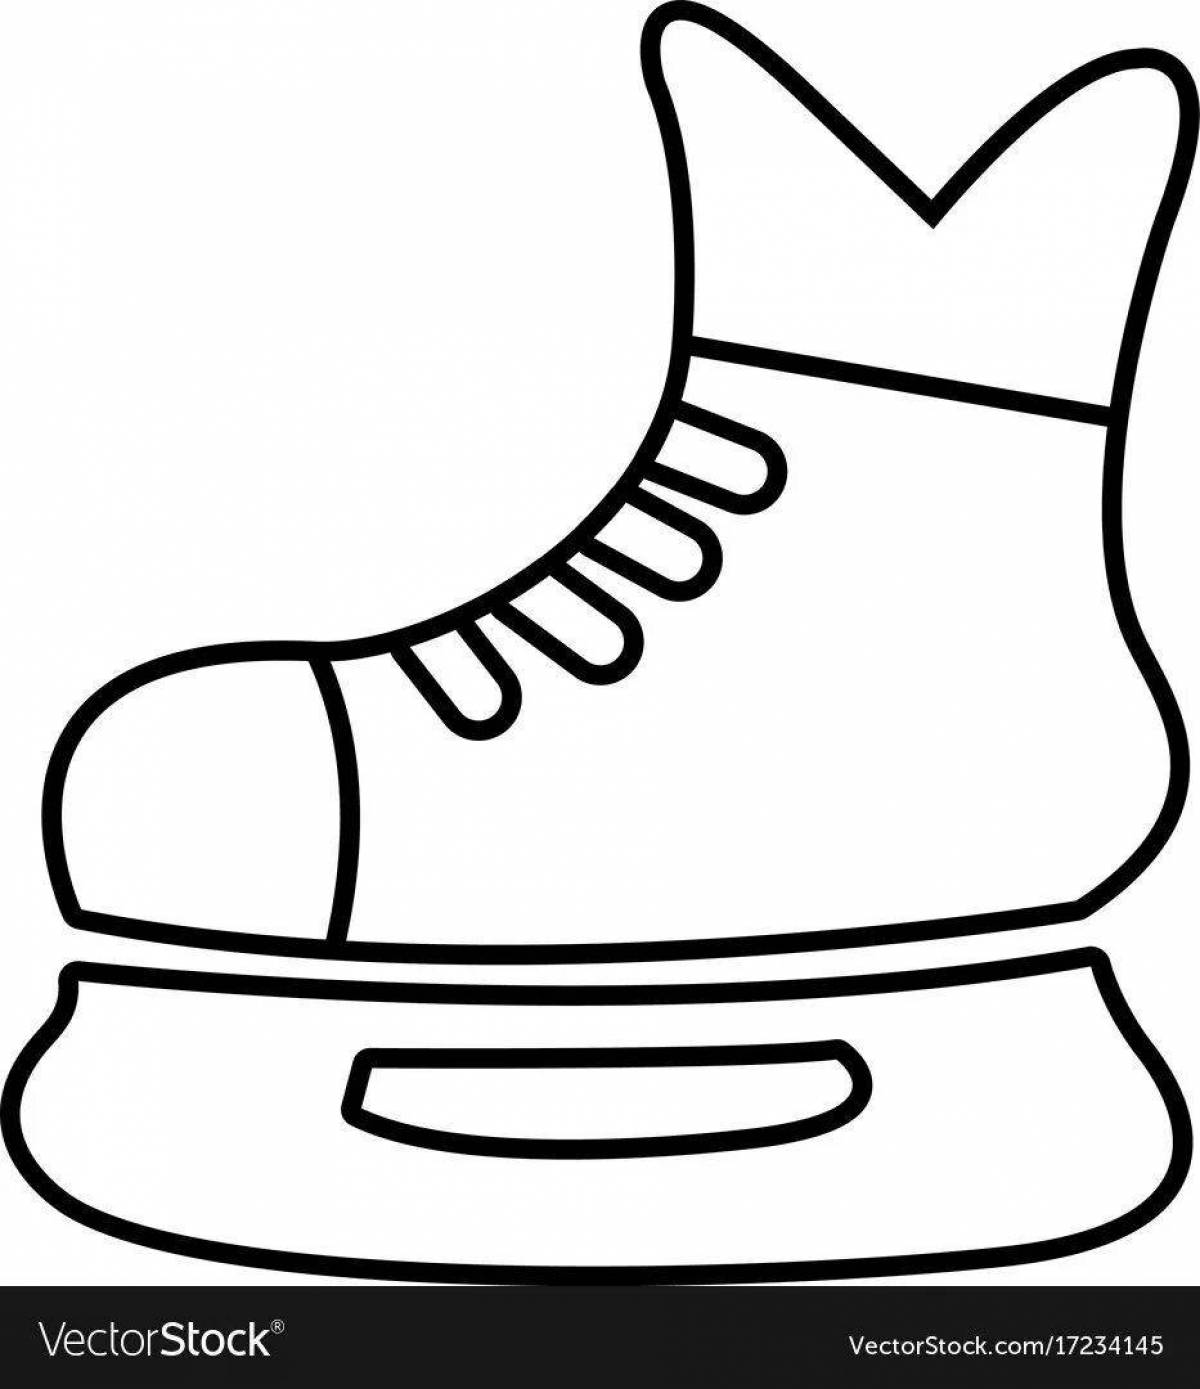 Joy skate coloring page